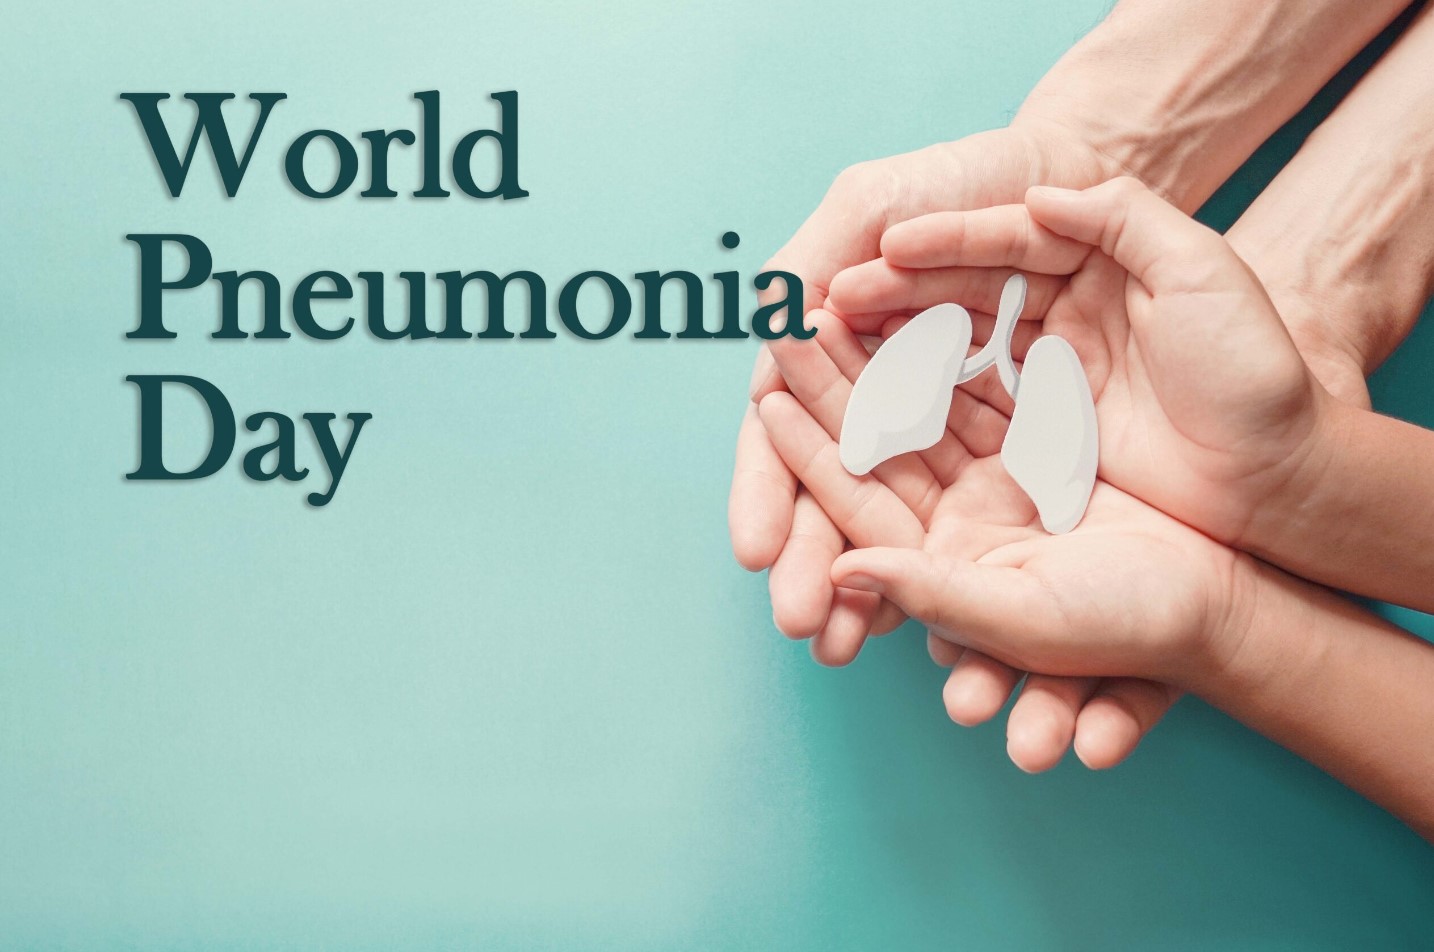 Pneumonia Day